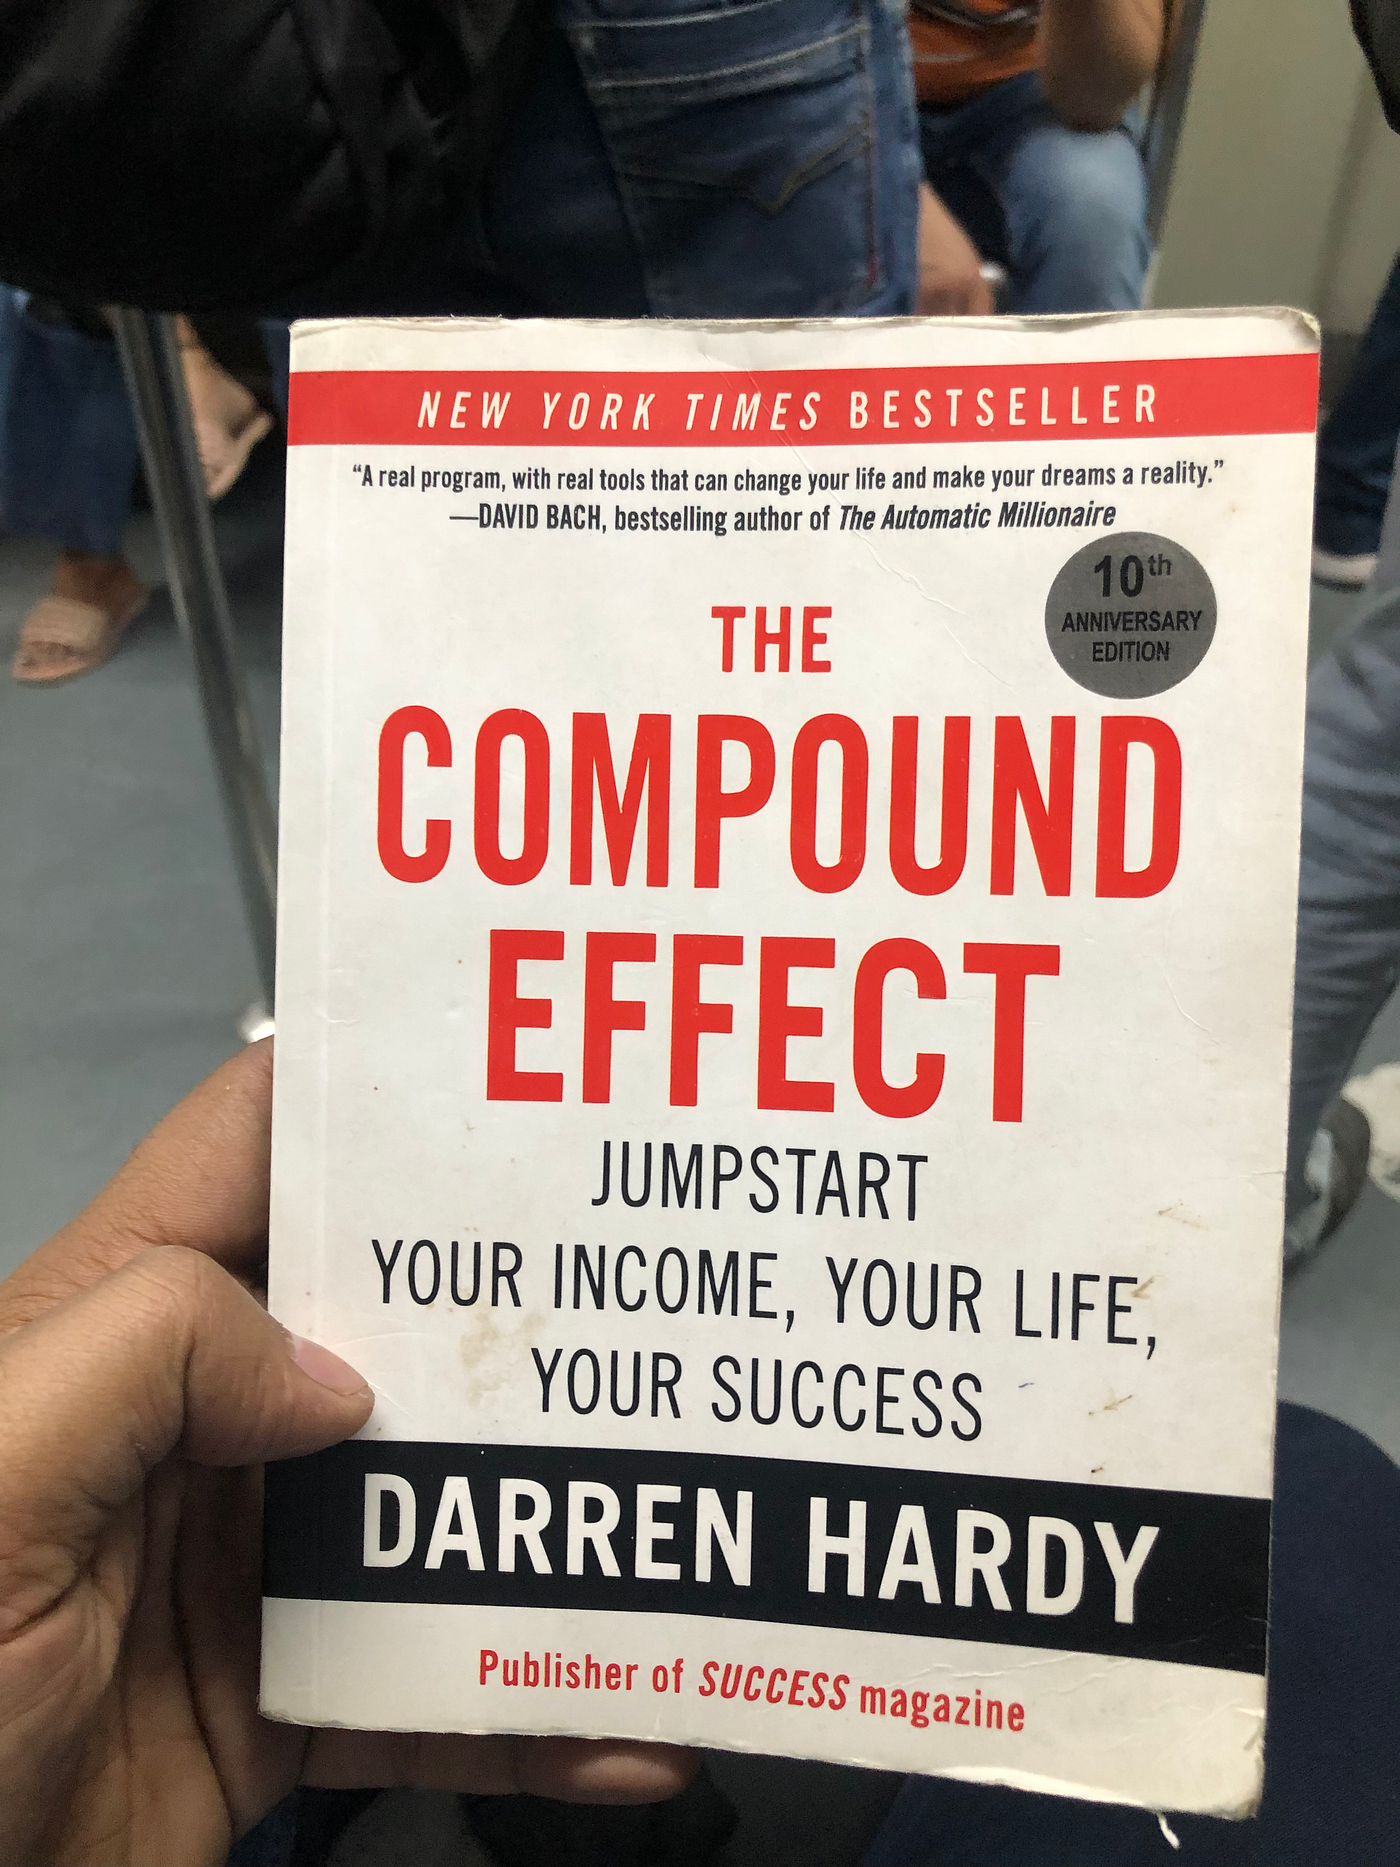 The compound effect — by Darren hardy | by Pawan Kumar | Medium